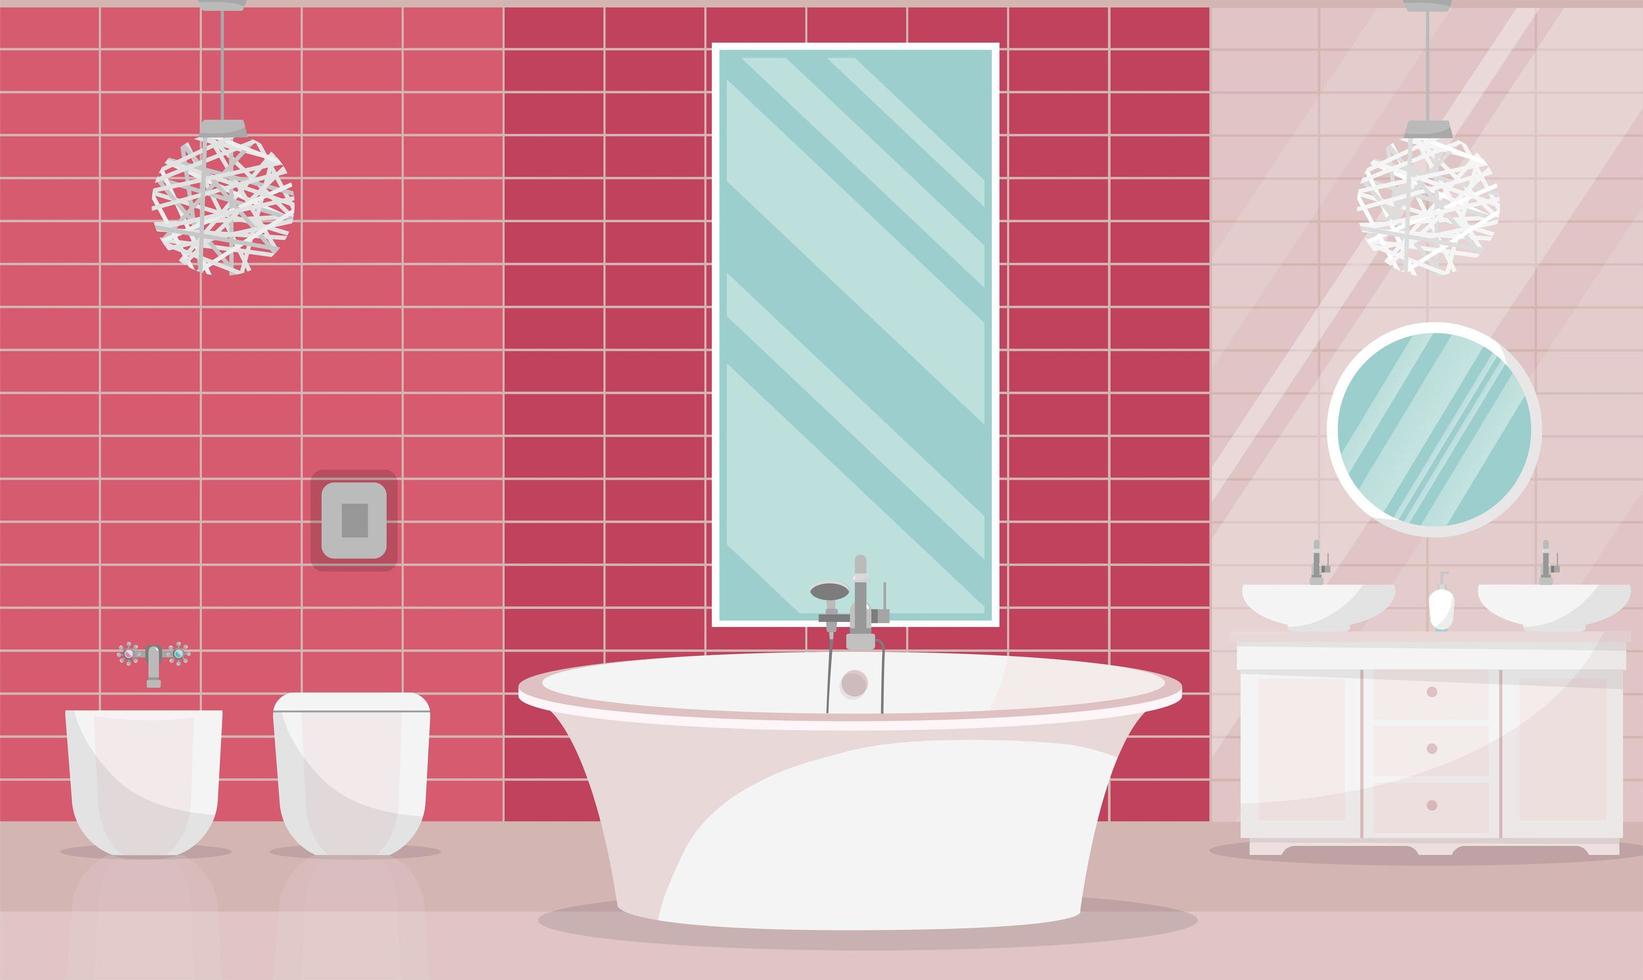 moderne elegante rijke badkamer interieur met badkuip. badkamermeubel - ligbad, standaard met twee wastafels, grote verticale spiegel, toilet, bidet, kroonluchter. platte cartoon vectorillustratie vector